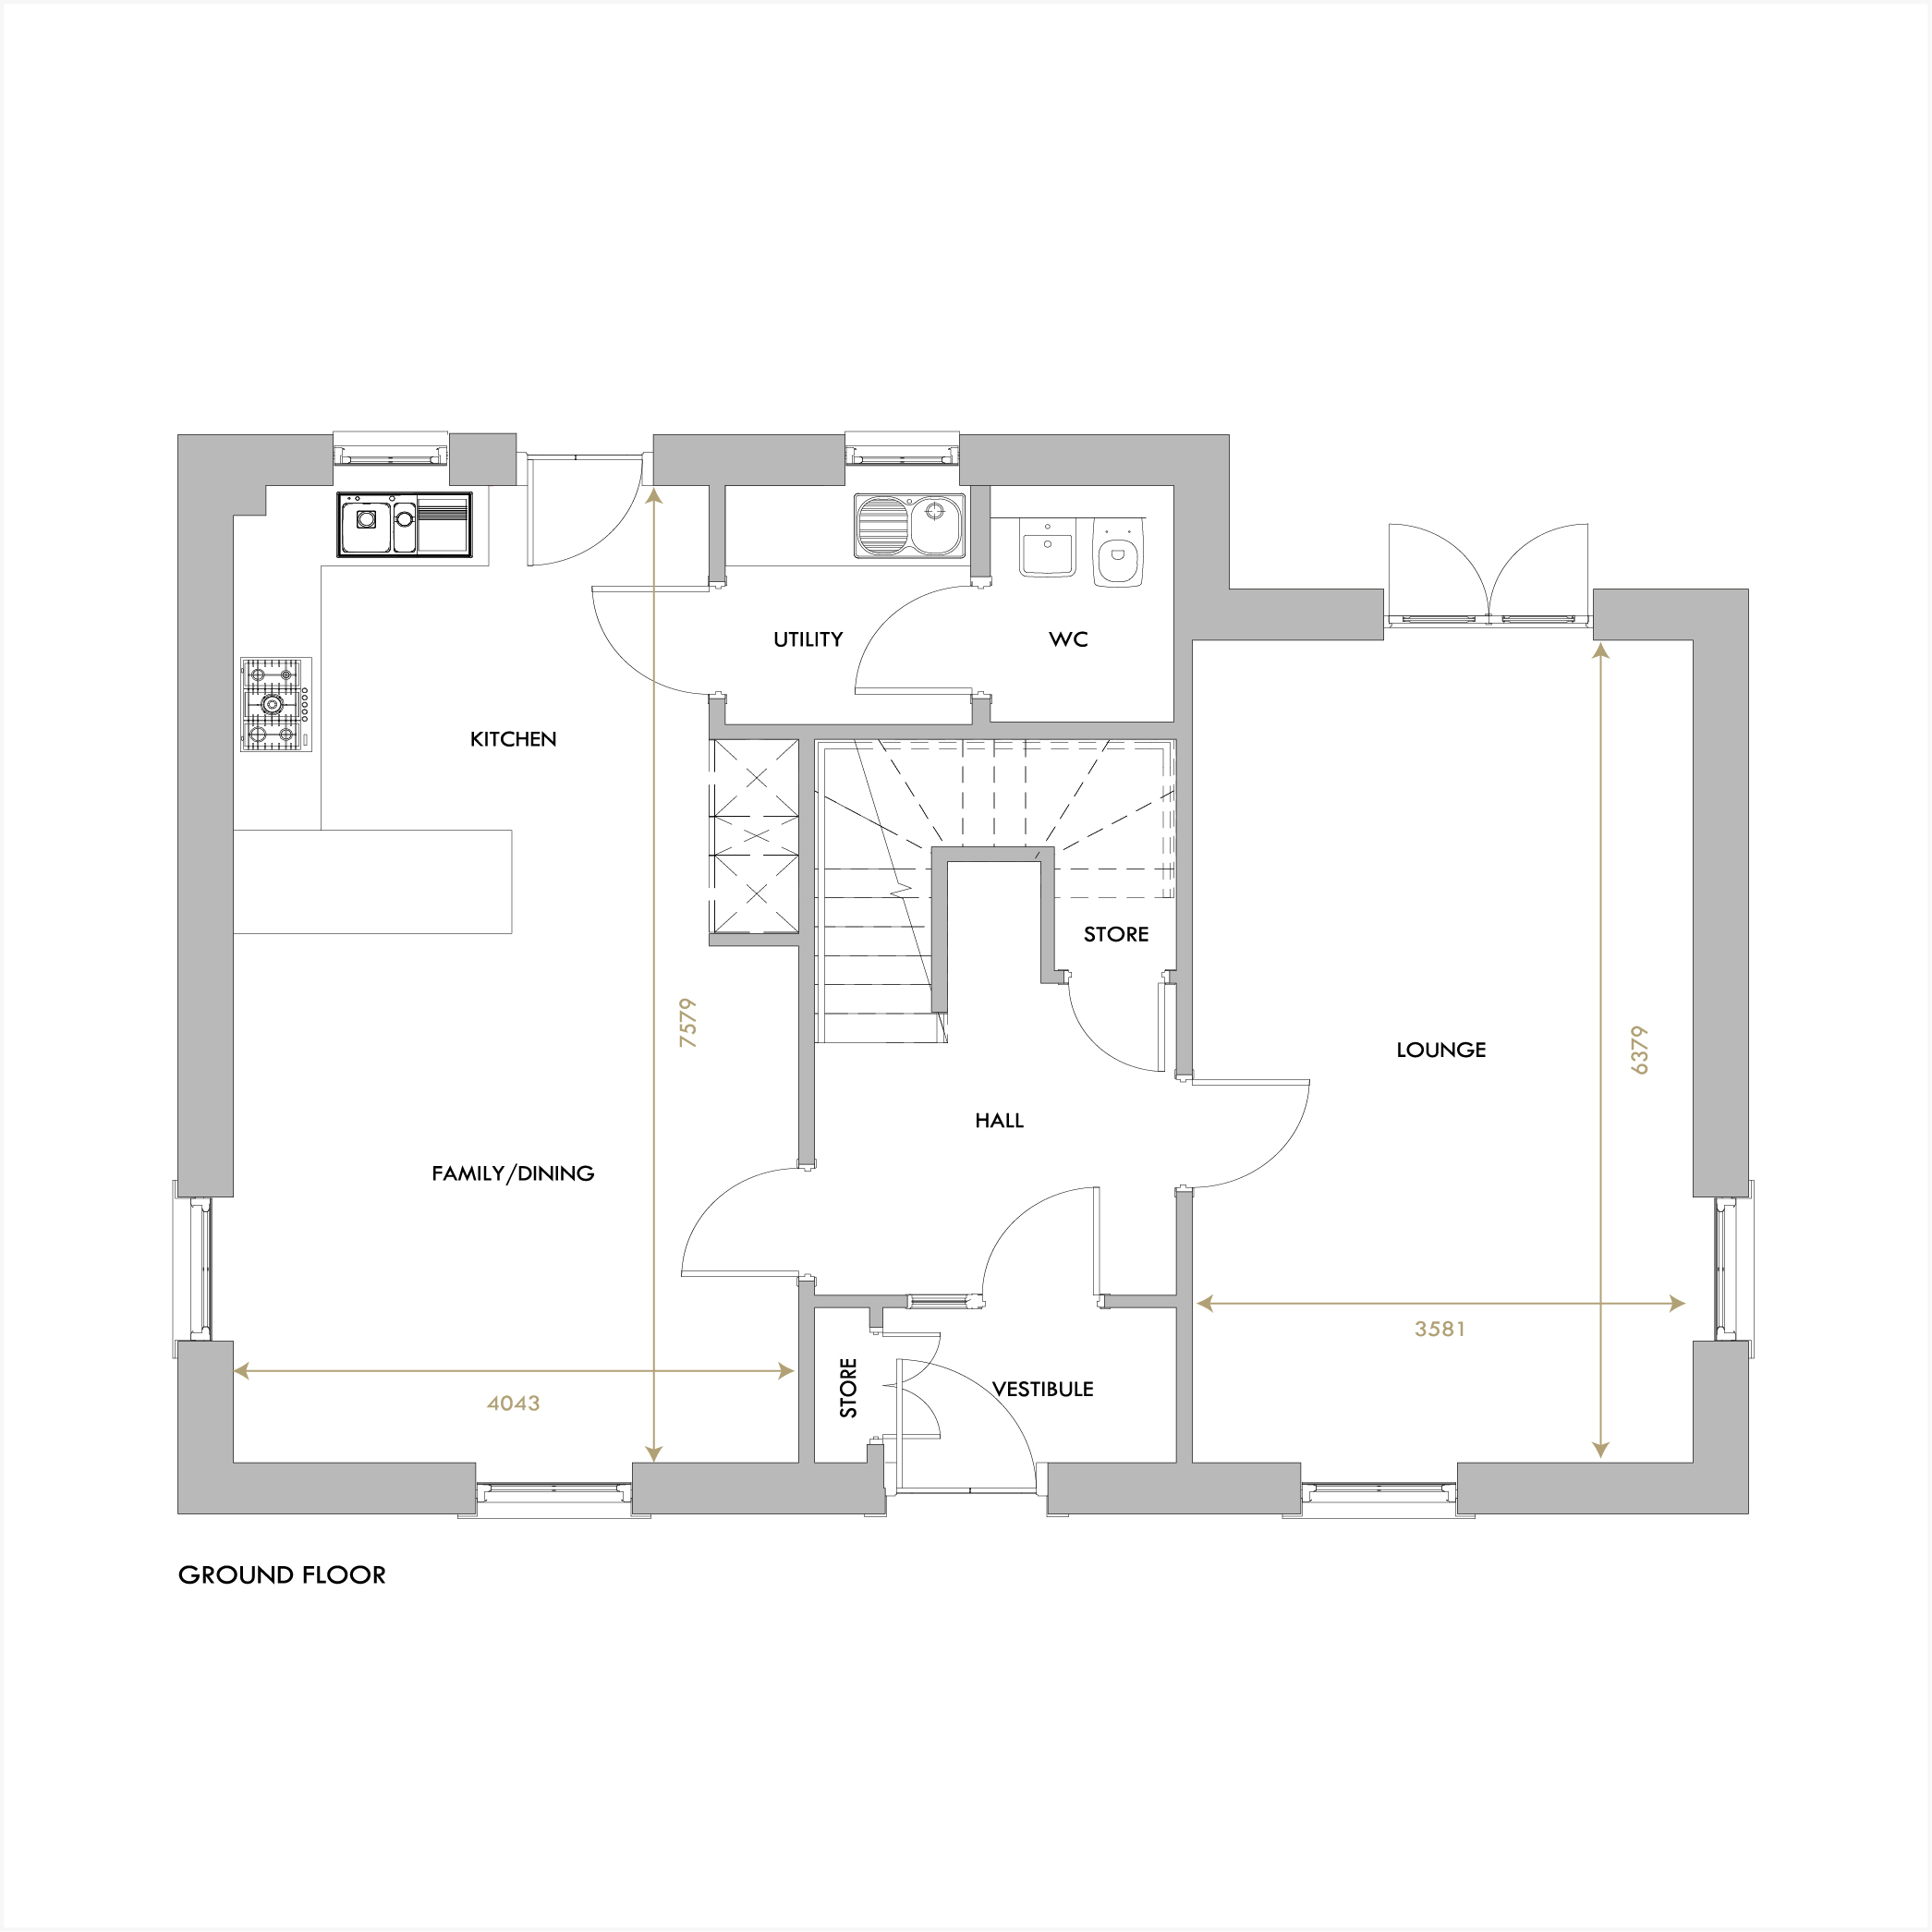 Lauderdale ground floor floorplan